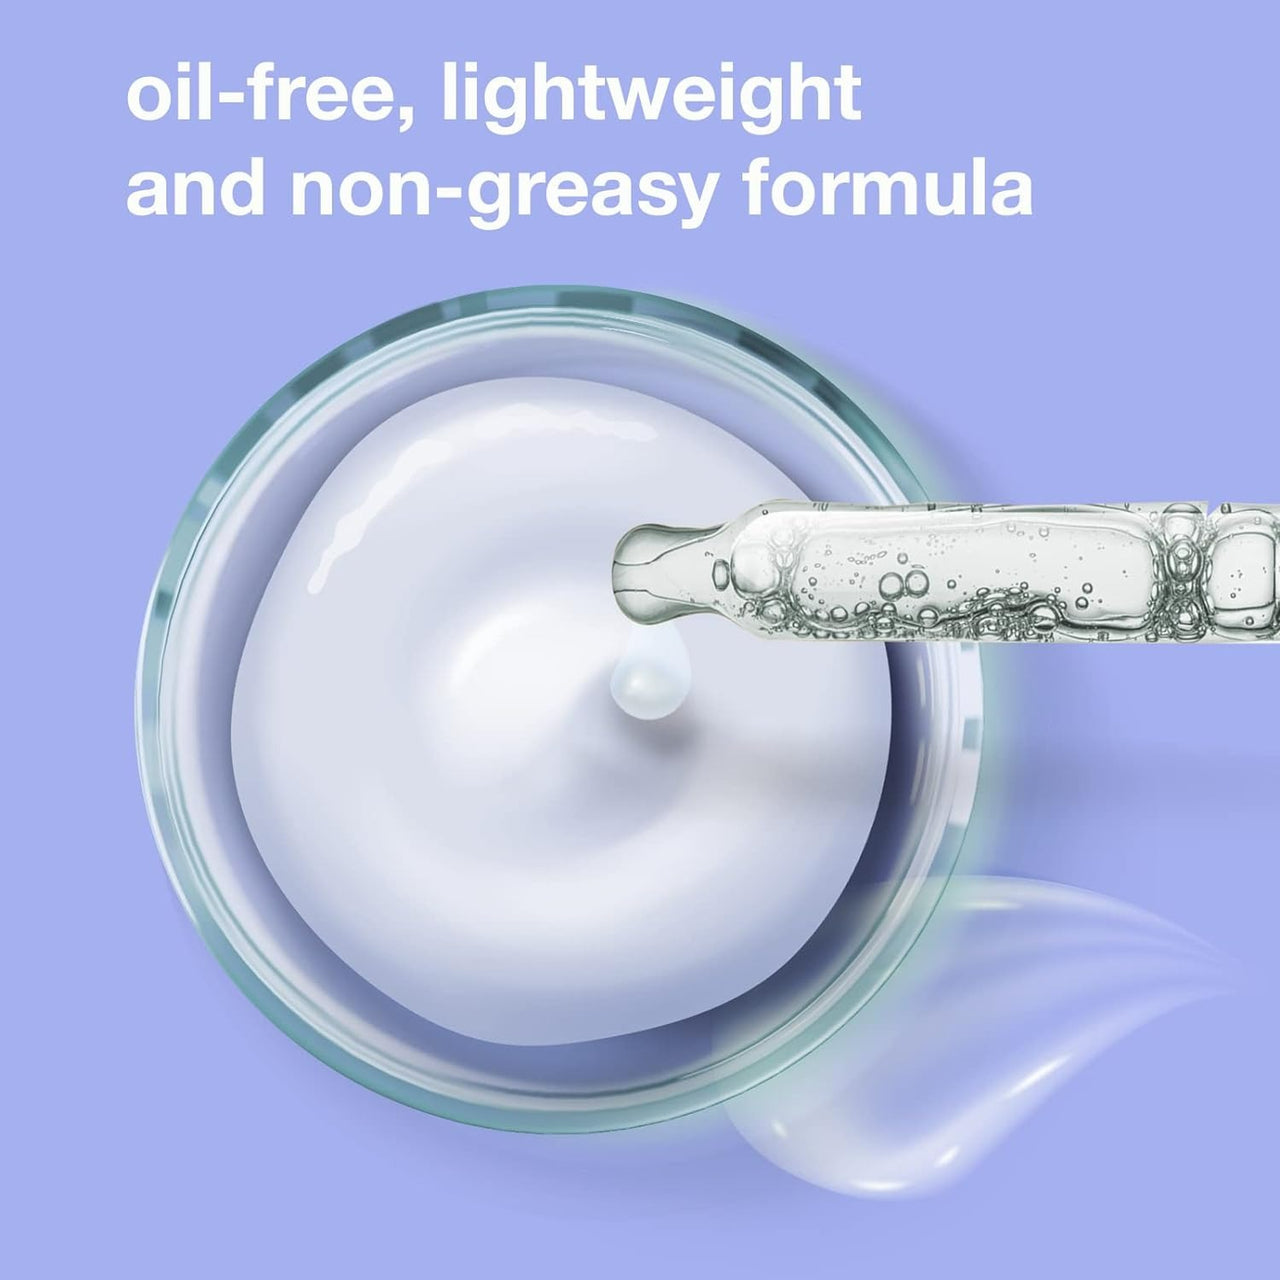 Neutrogena Oil-Free Moisture for Combination Skin